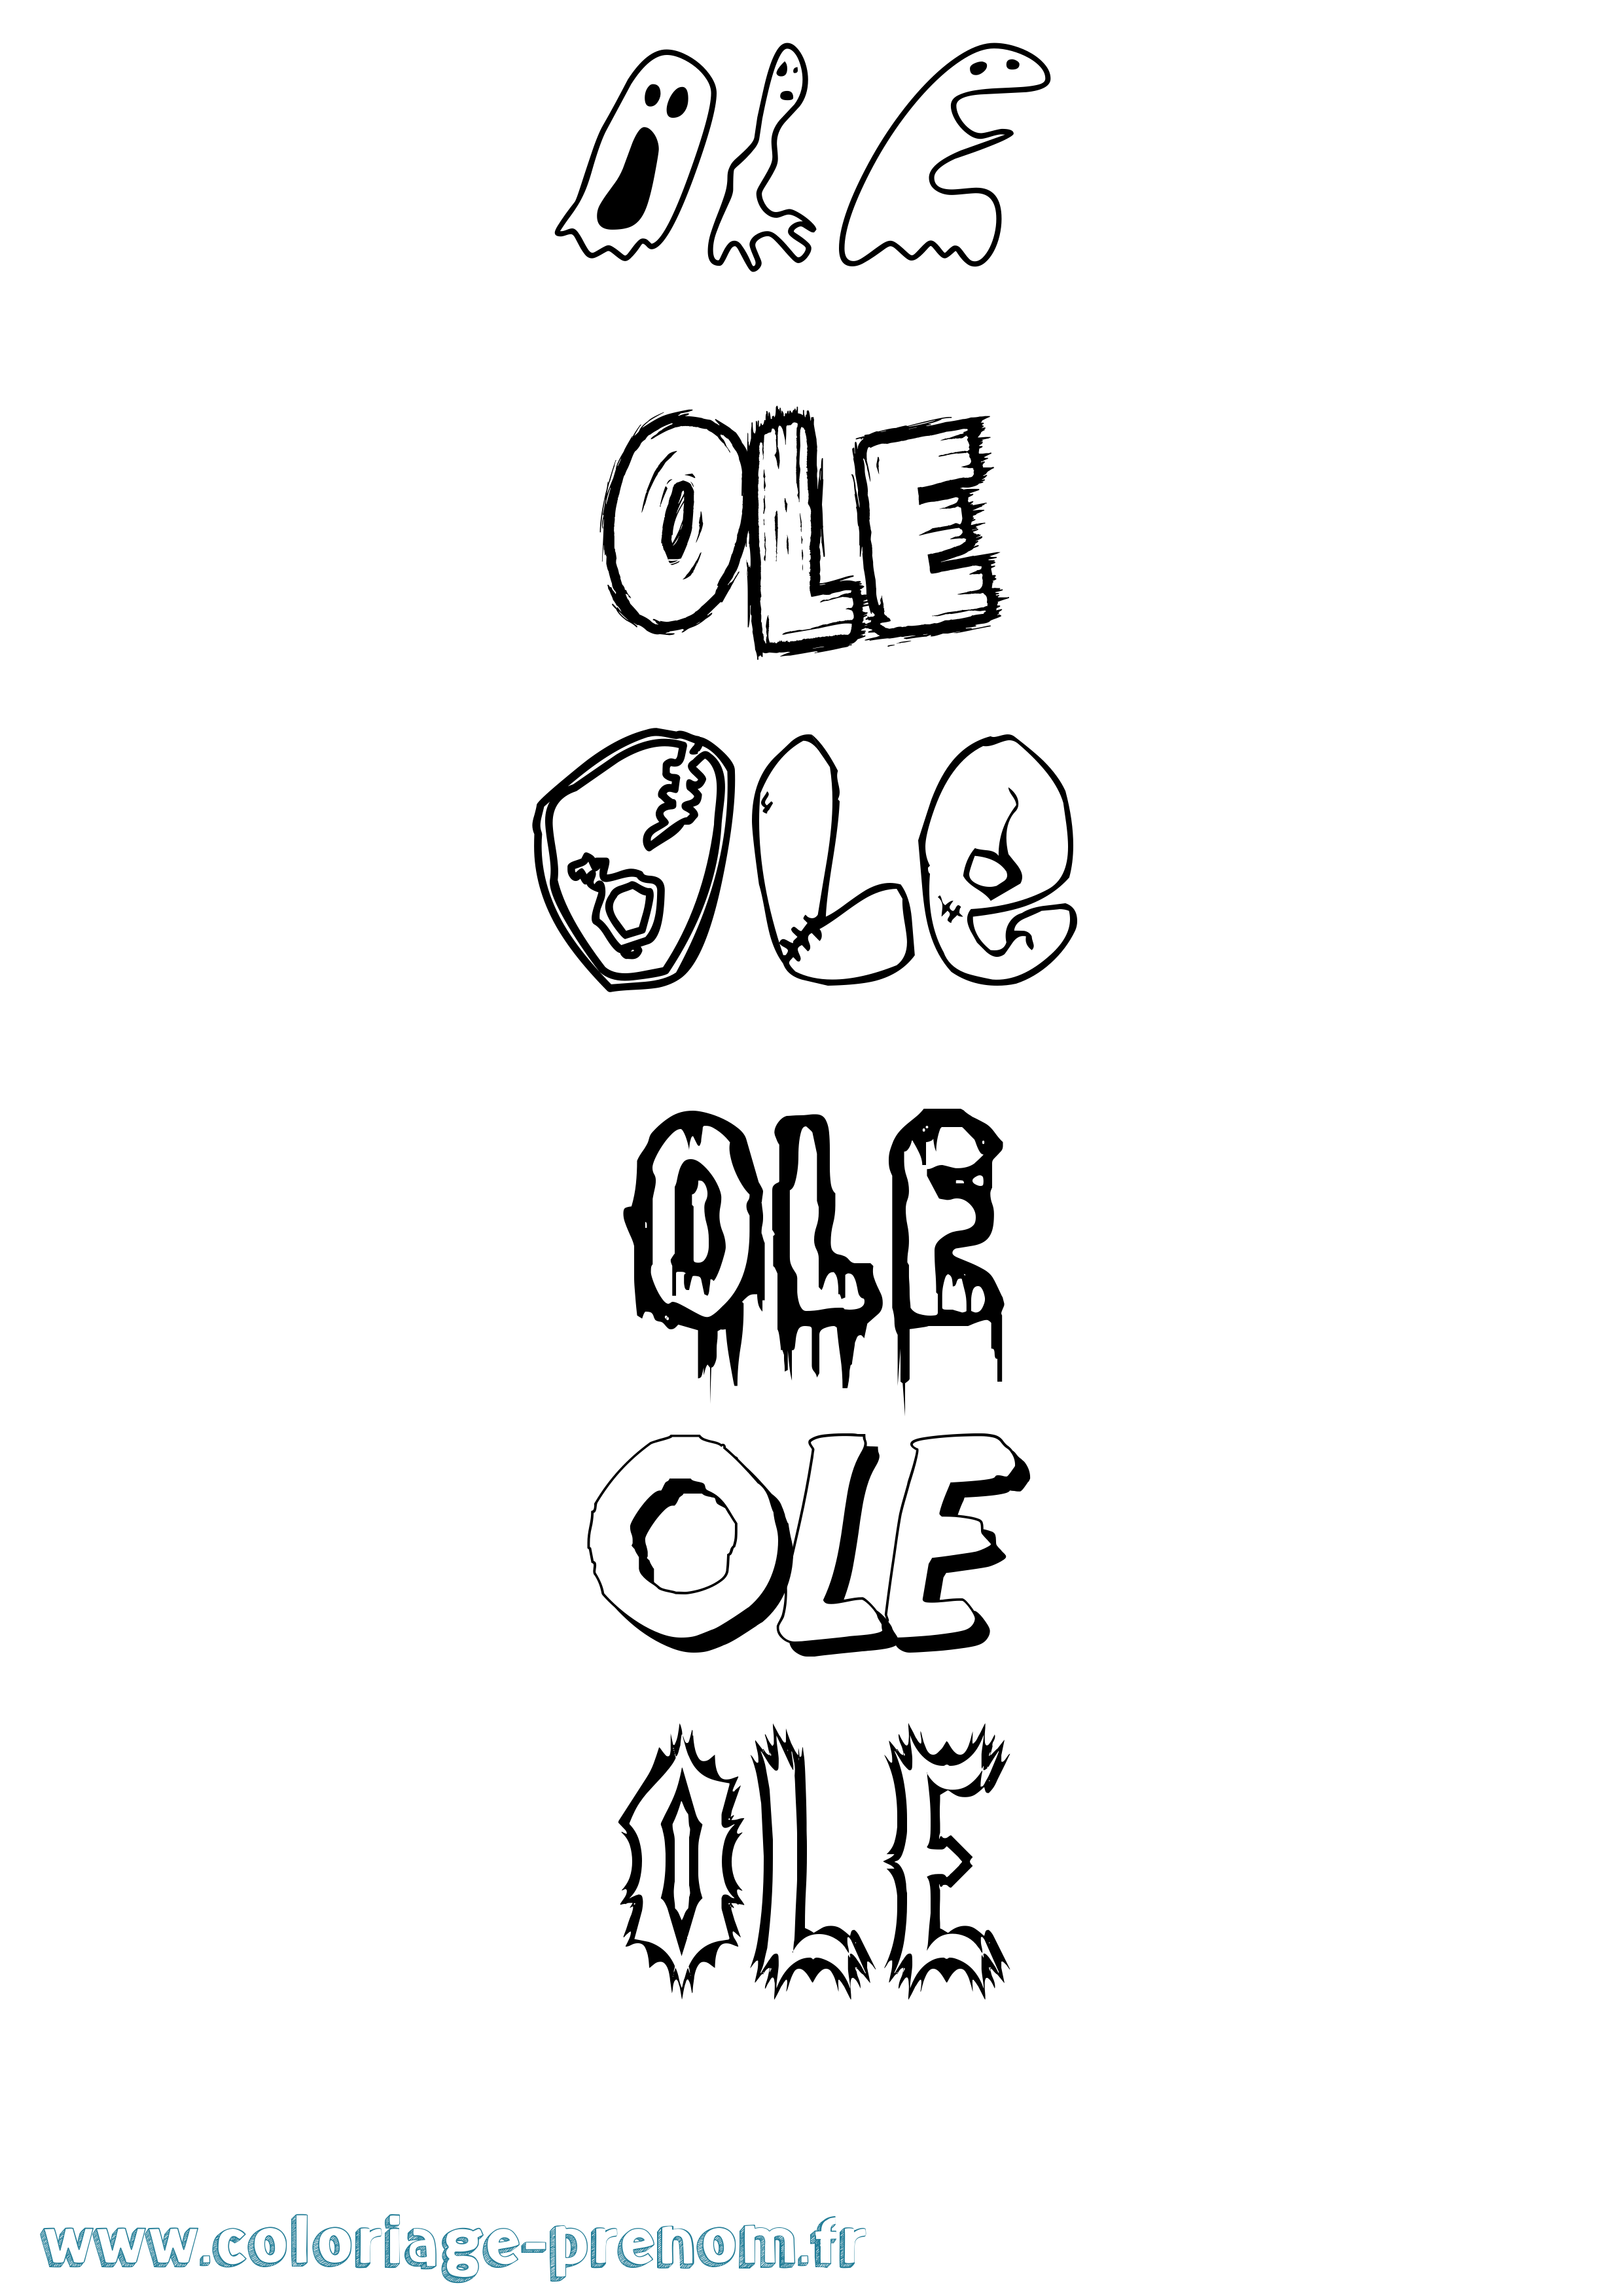 Coloriage prénom Ole Frisson